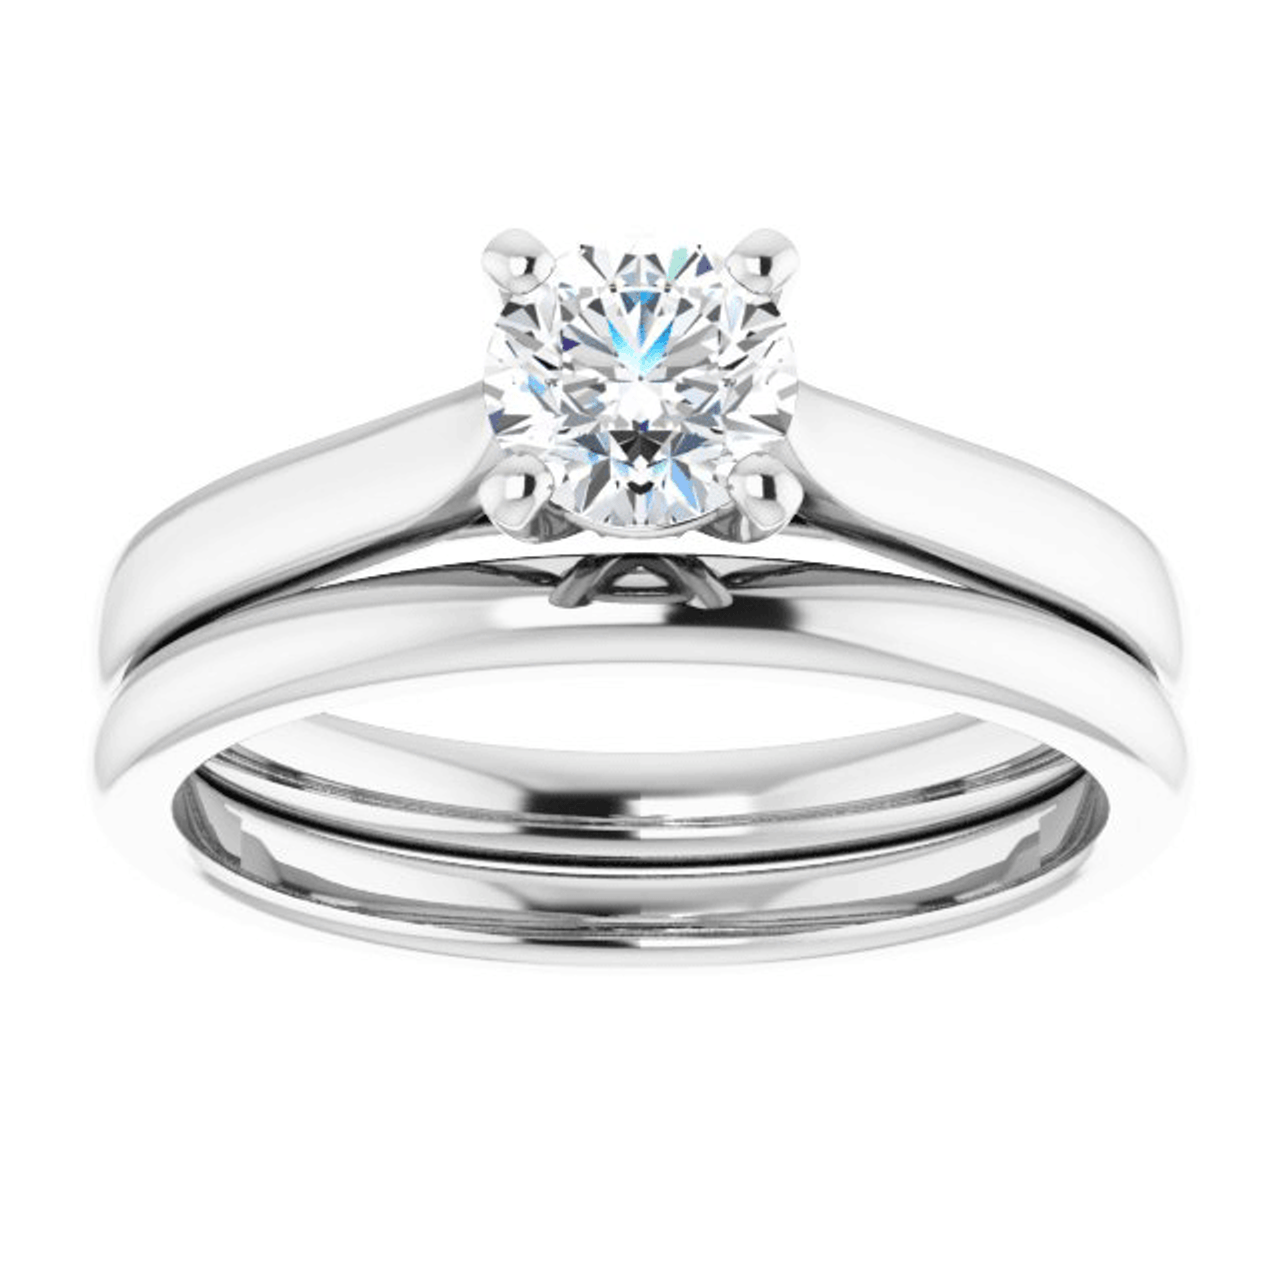 emma stone wedding ring